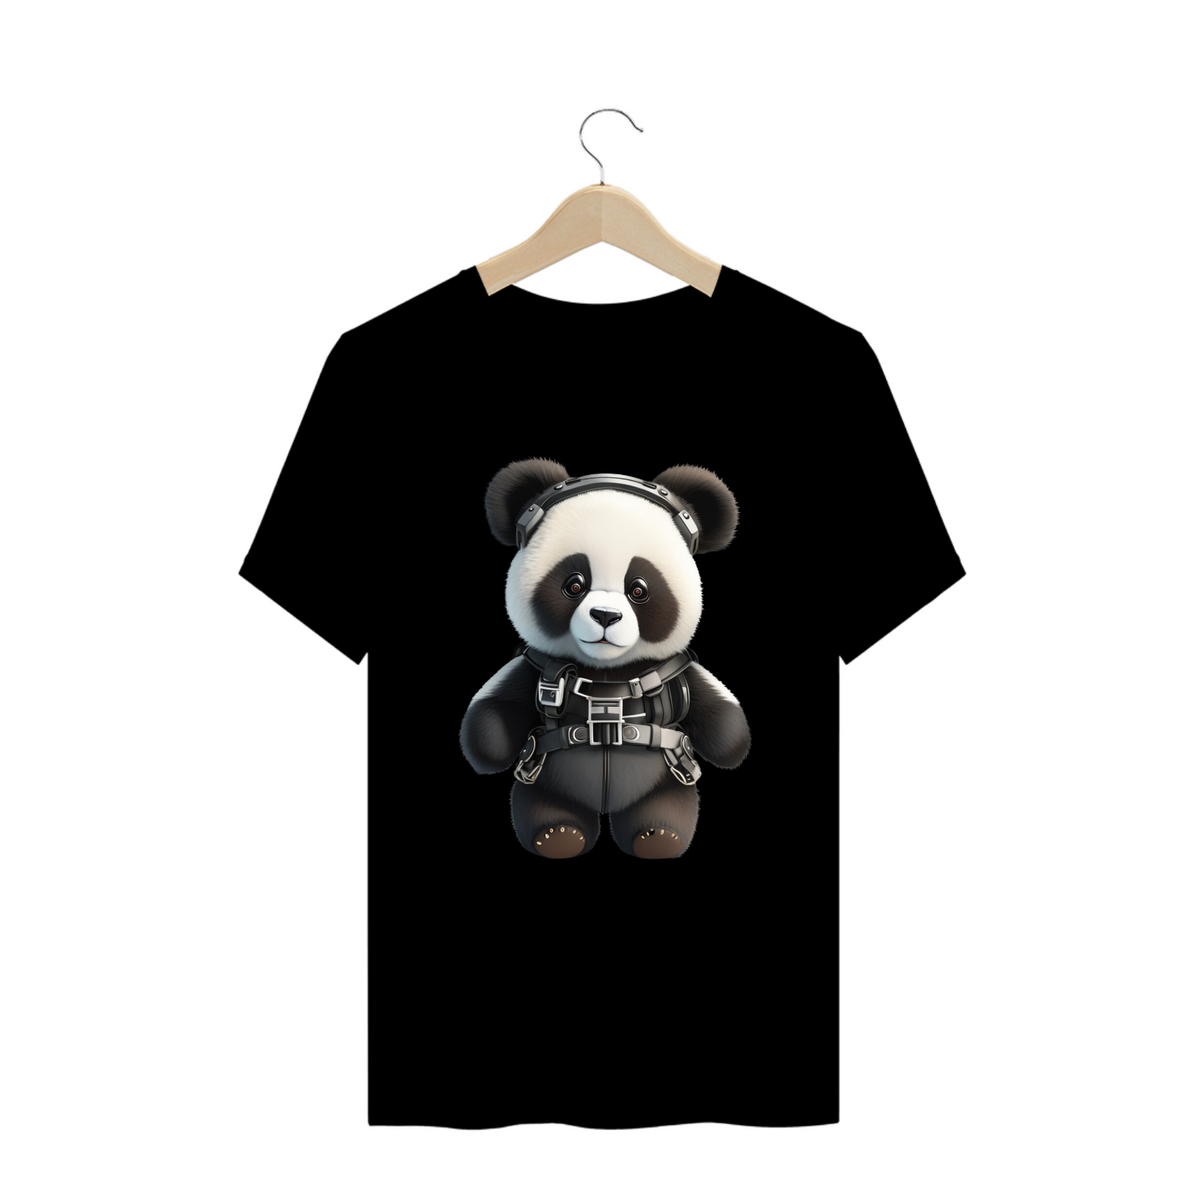 Nome do produto: Panda 2 - Plus Size